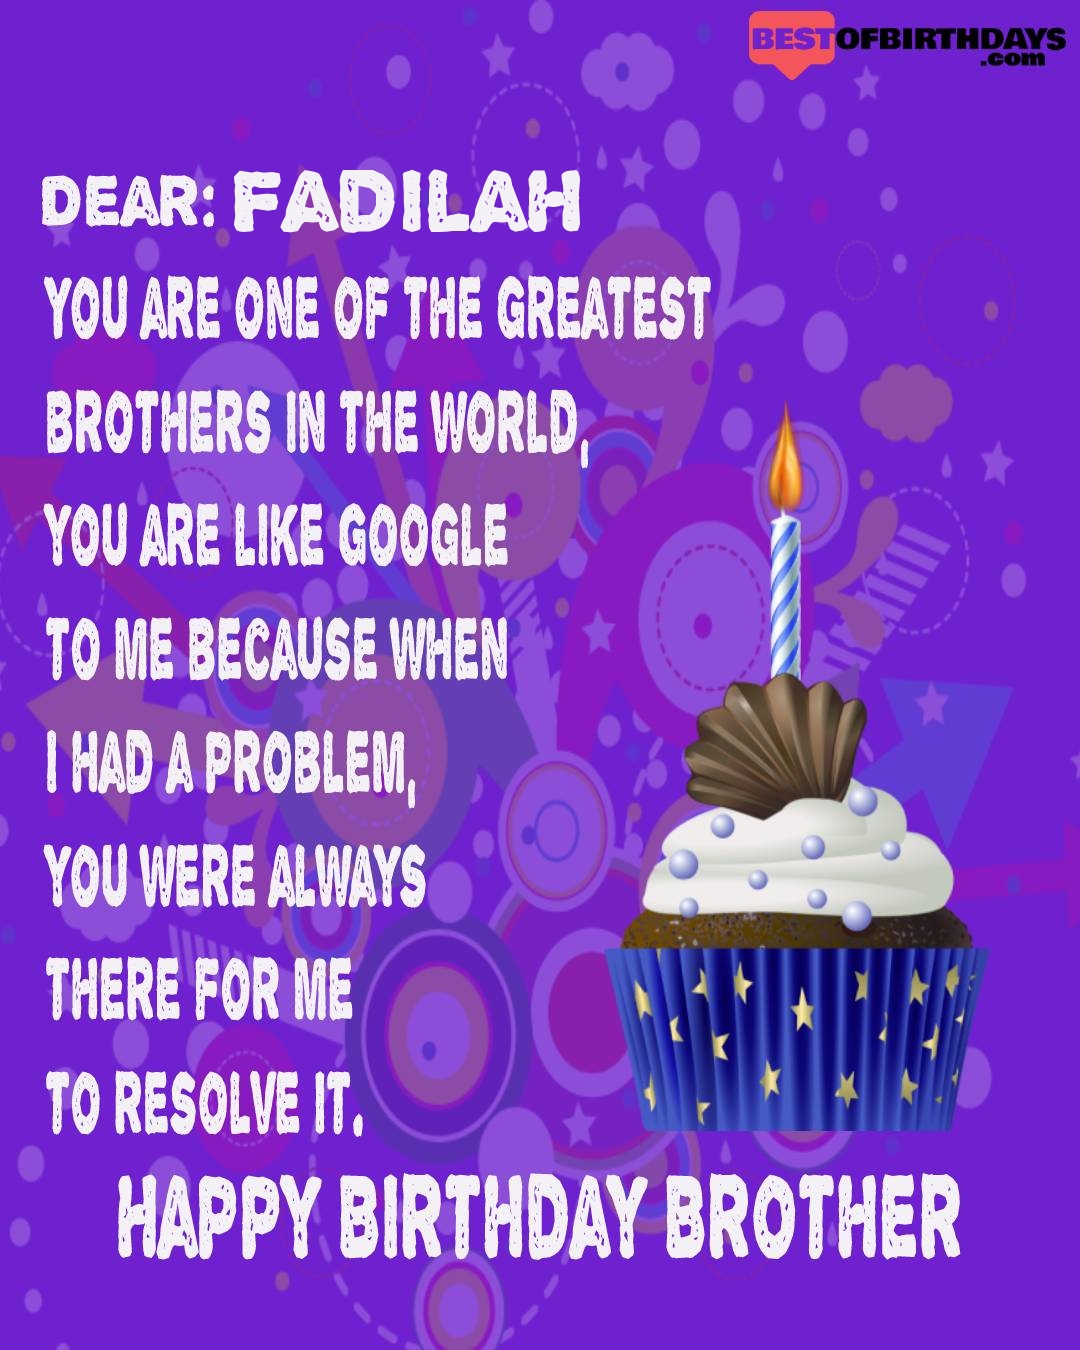 Happy birthday fadilah bhai brother bro